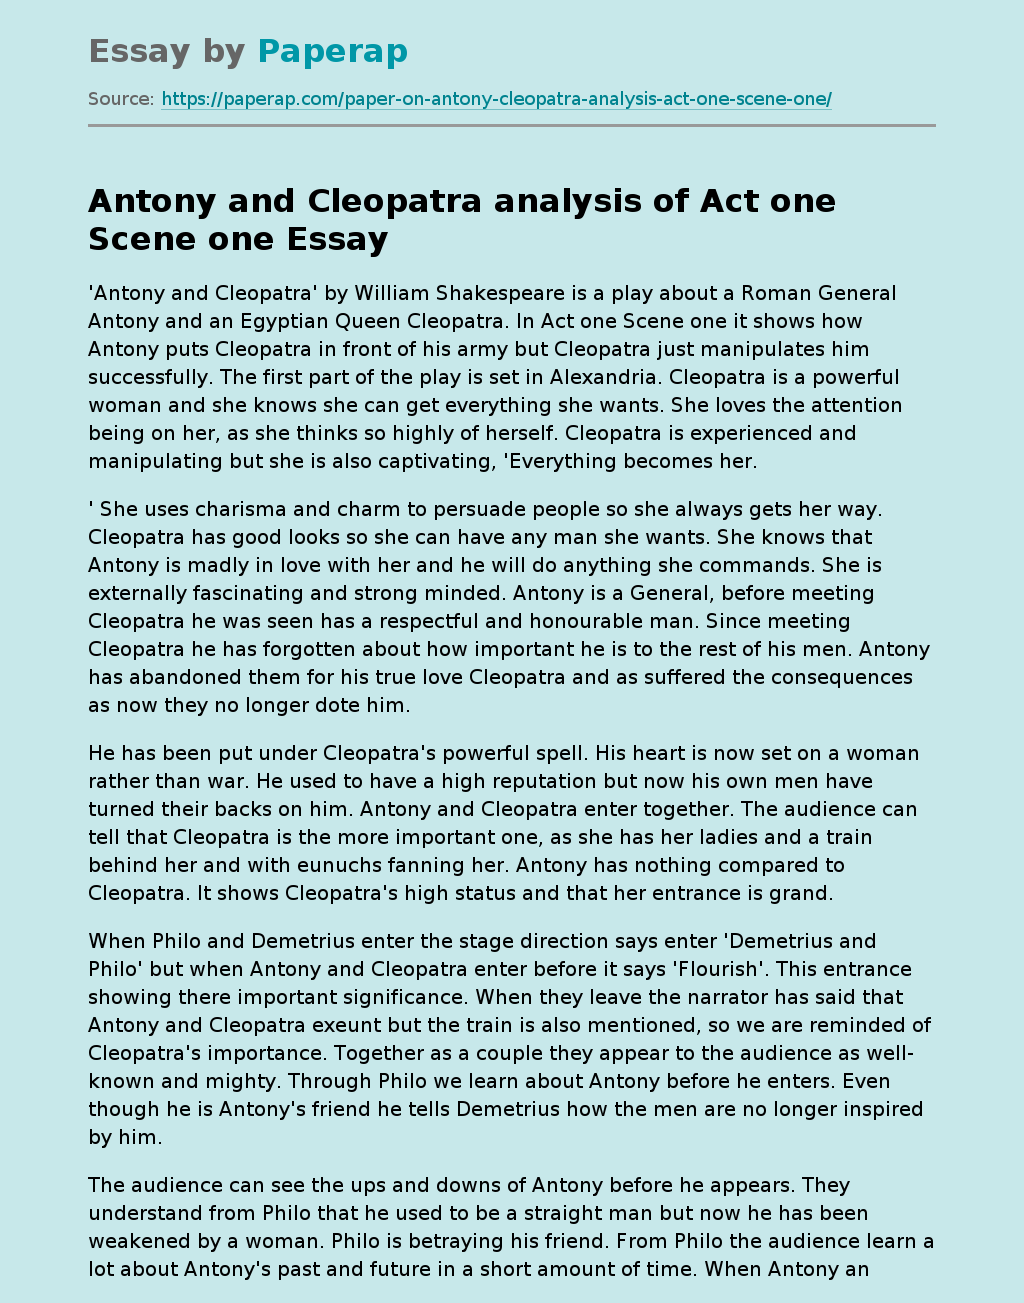 Antony and Cleopatra analysis of Act one Scene one